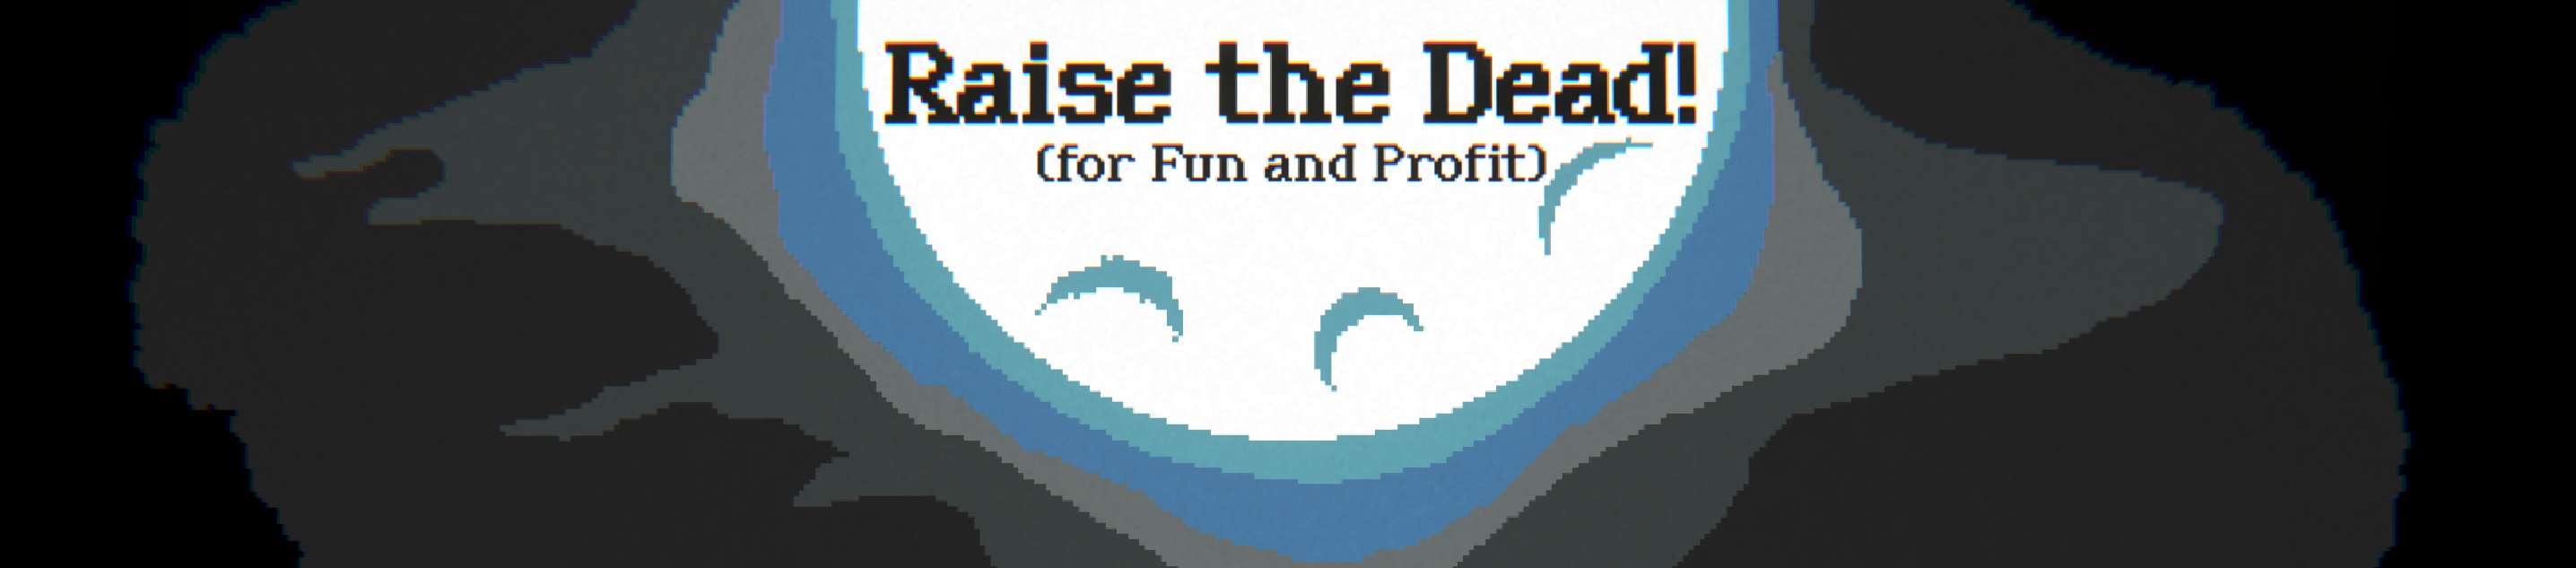 Raise the Dead for Fun and Profit Demo